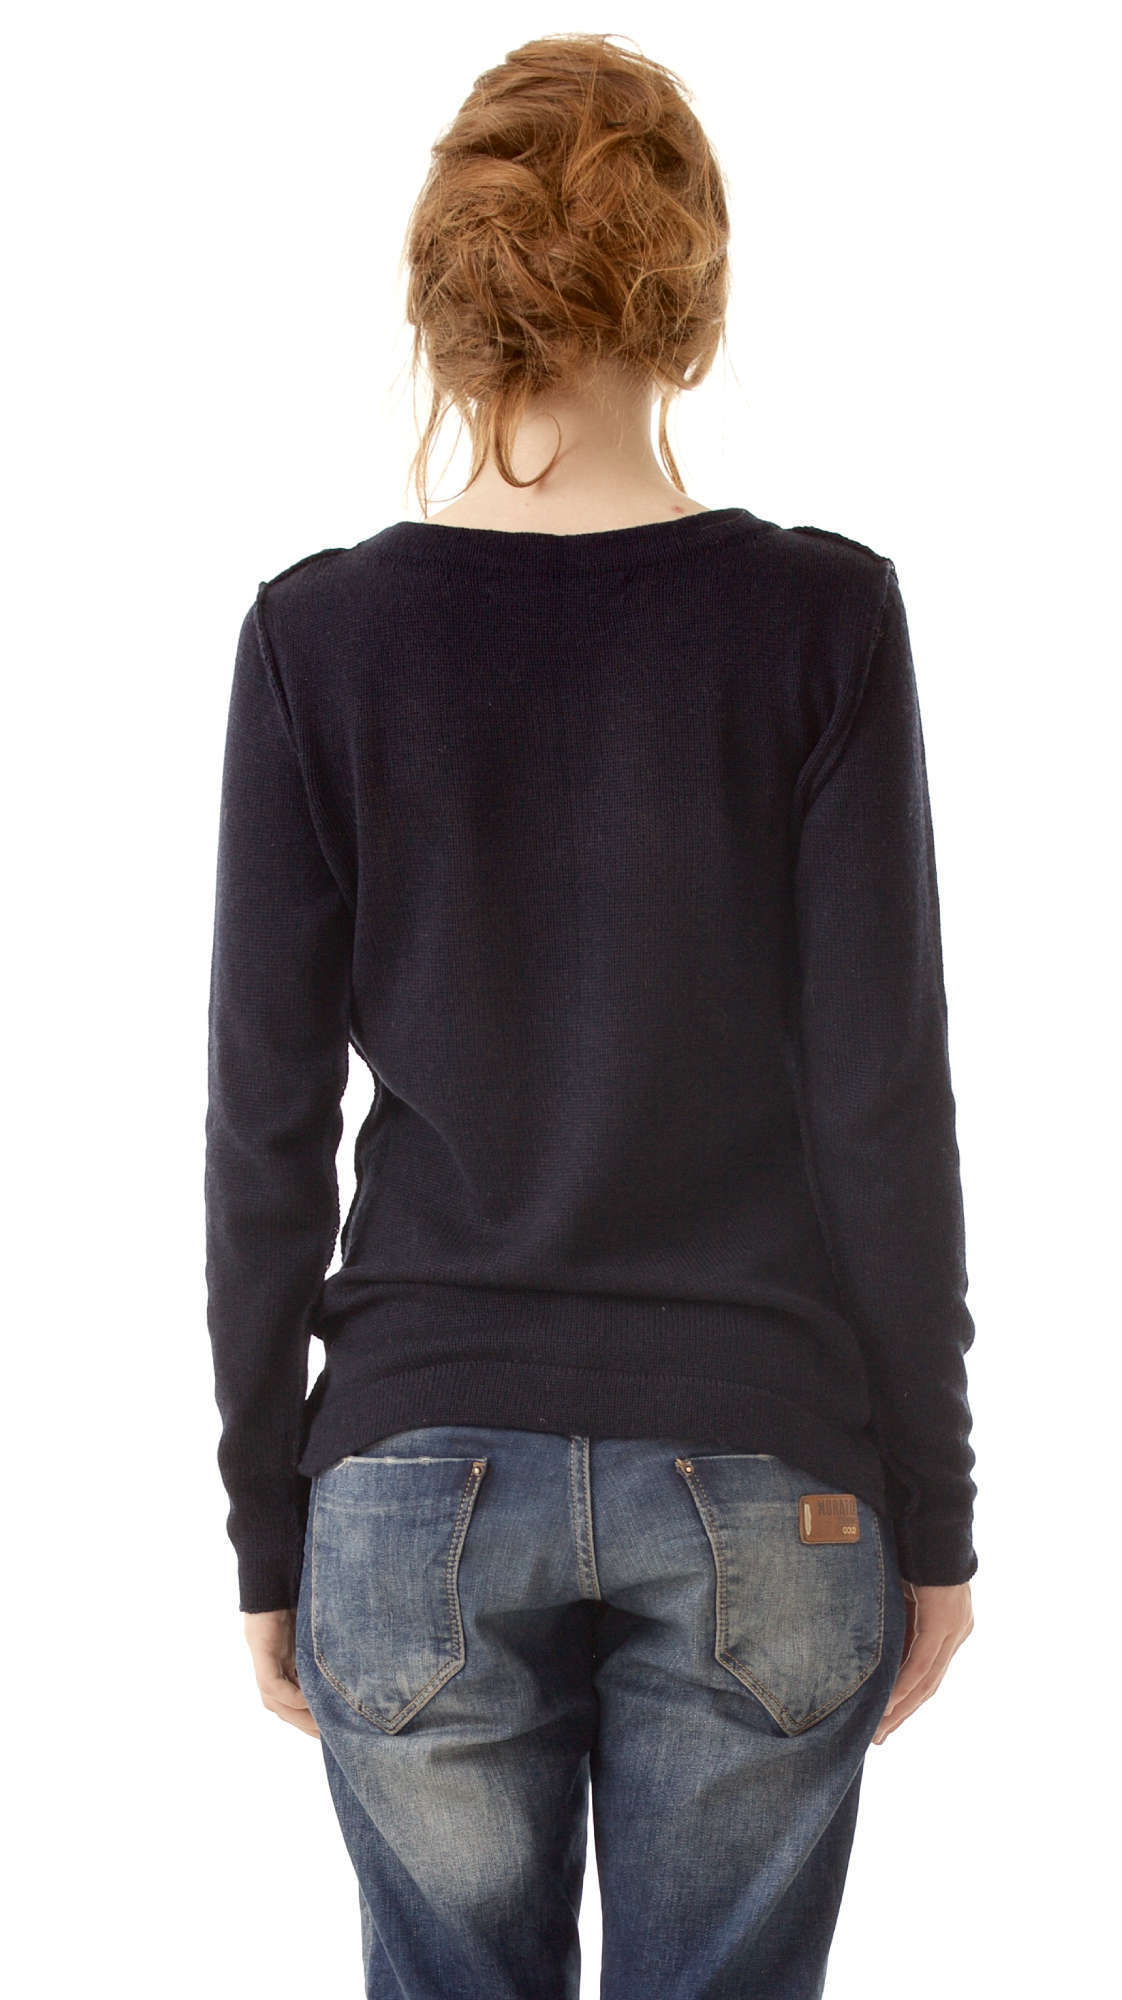 Black cashmere womens sweater damen pullover ELSA